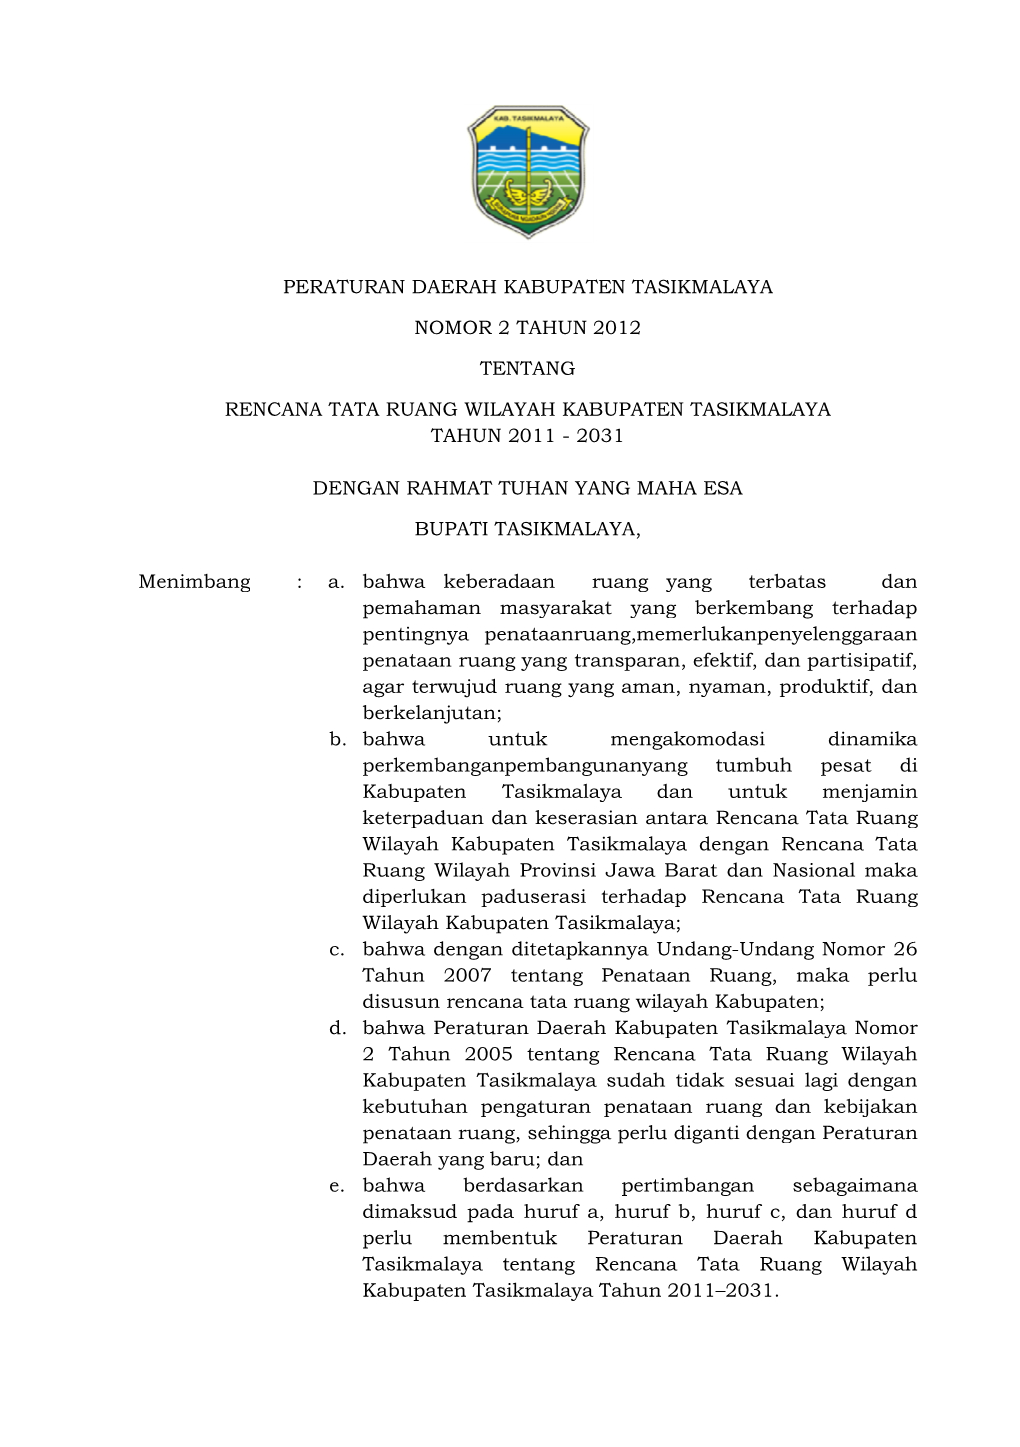 Peraturan Daerah Kabupaten Tasikmalaya Nomor 2 Tahun